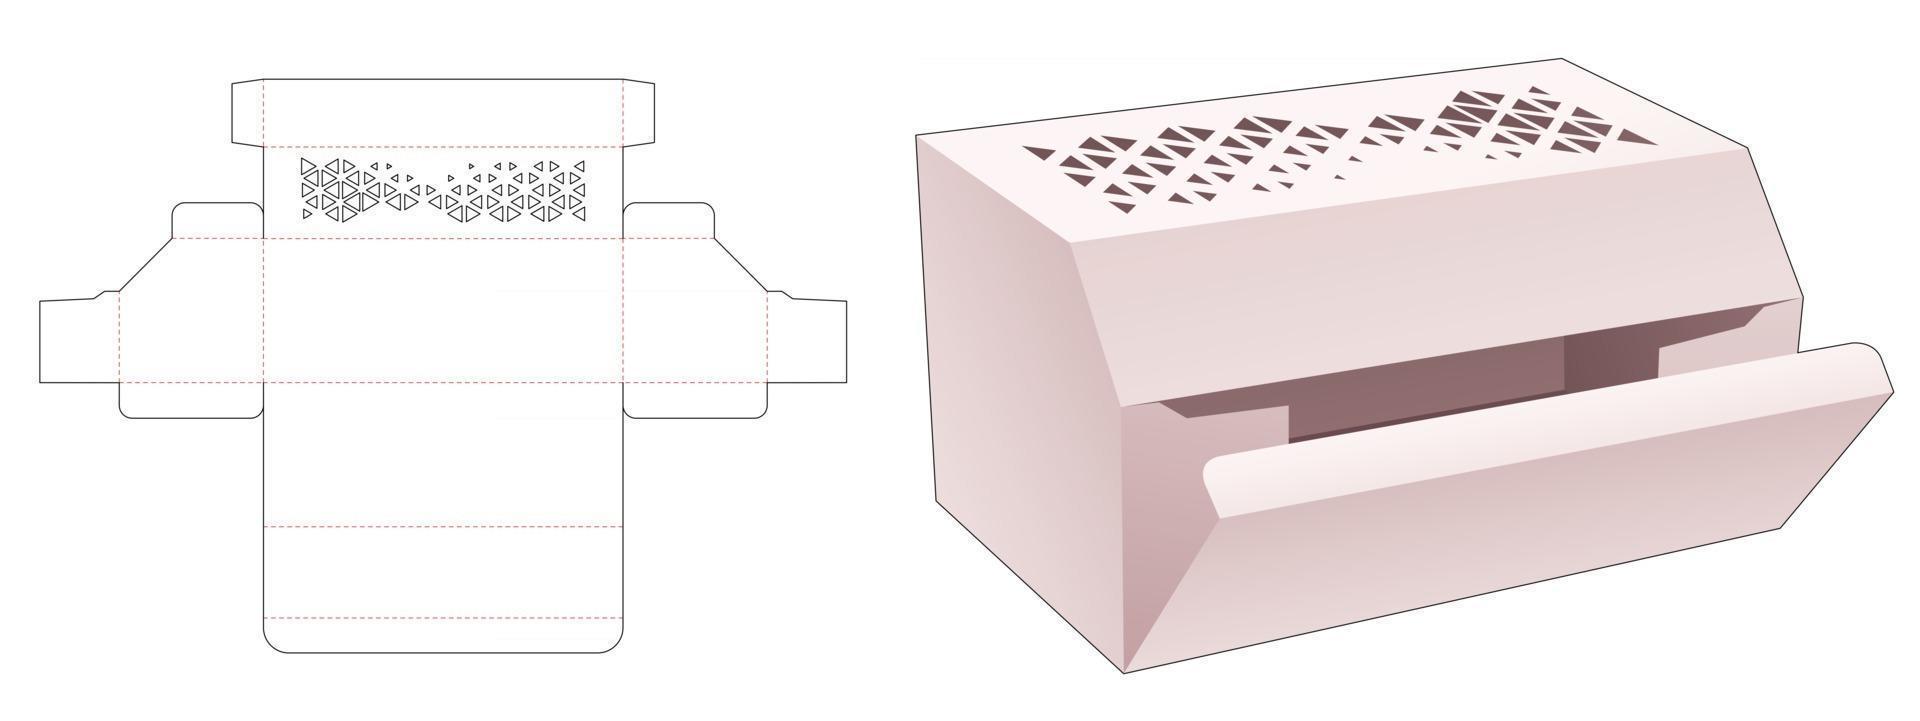 caja de embalaje plantilla troquelada vector